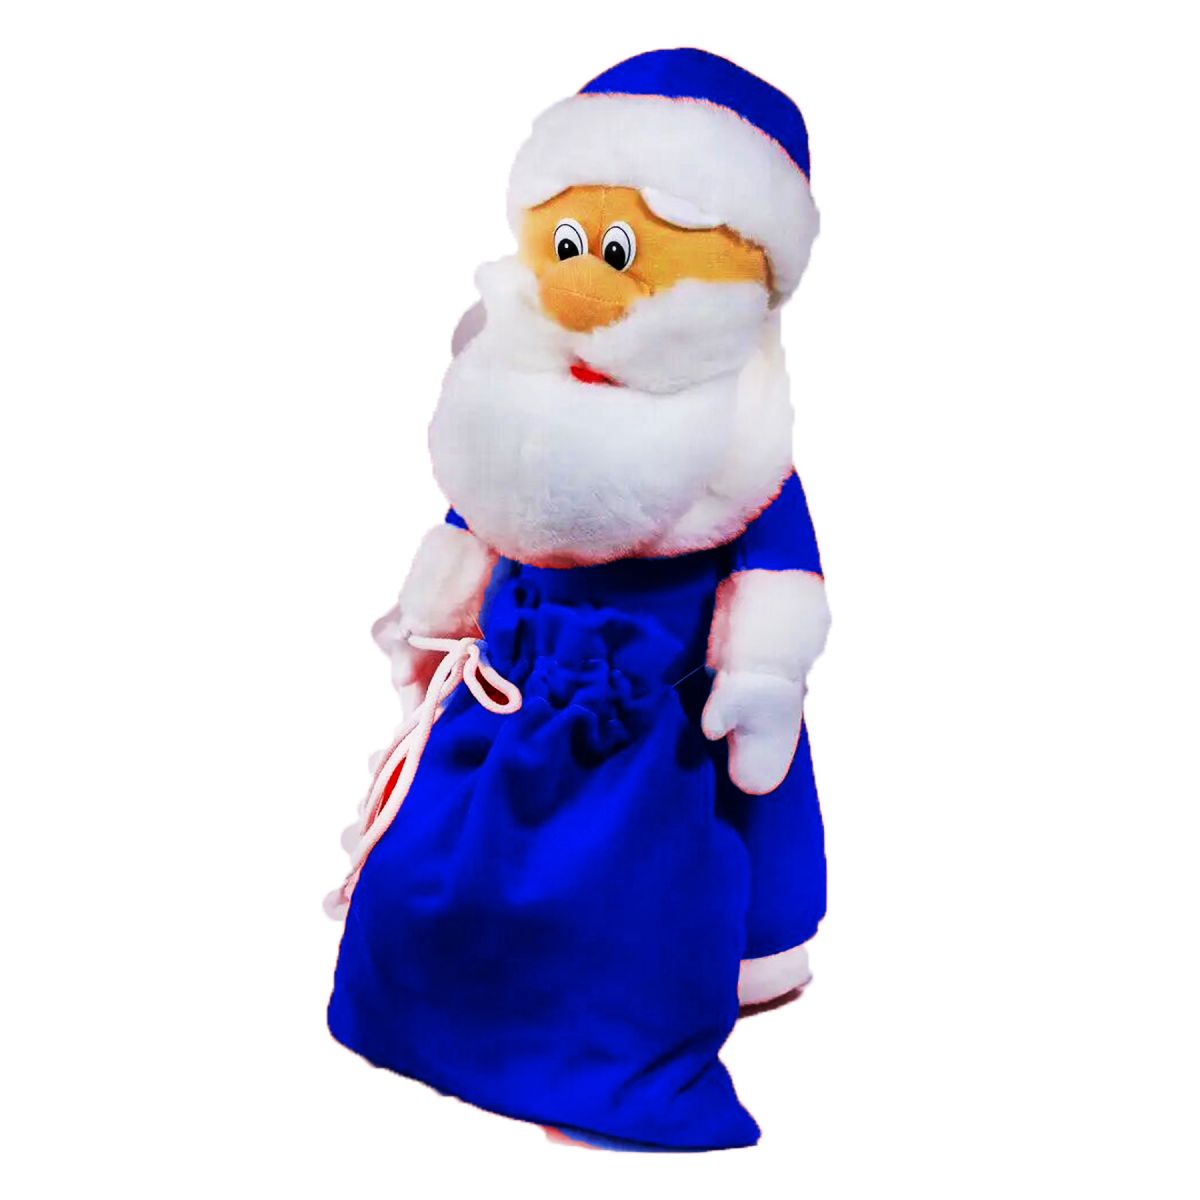 Мягкая игрушка "Санта Клаус" в синем